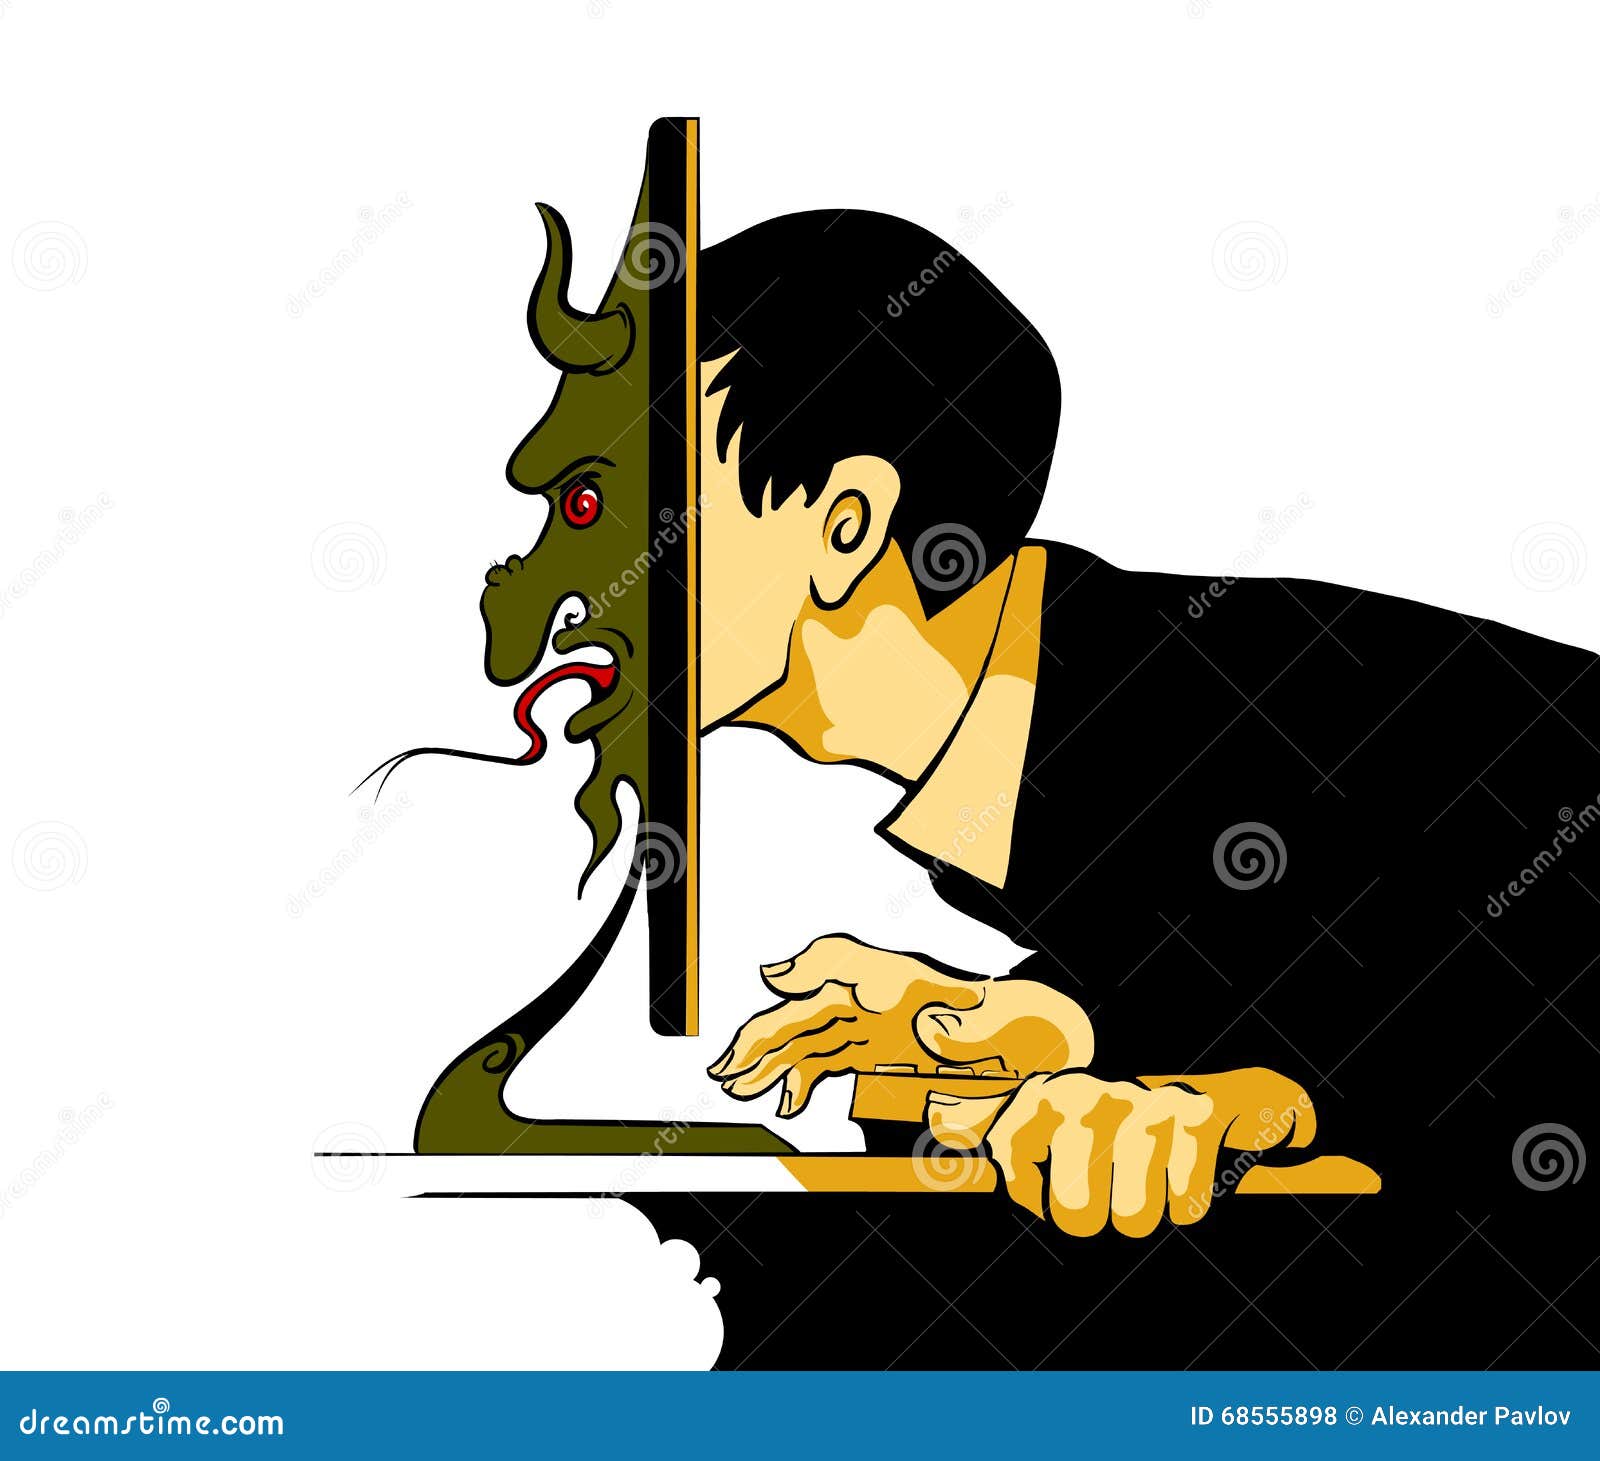 internet-troll-sitting-computer-vector-illustration-gradients-68555898.jpg